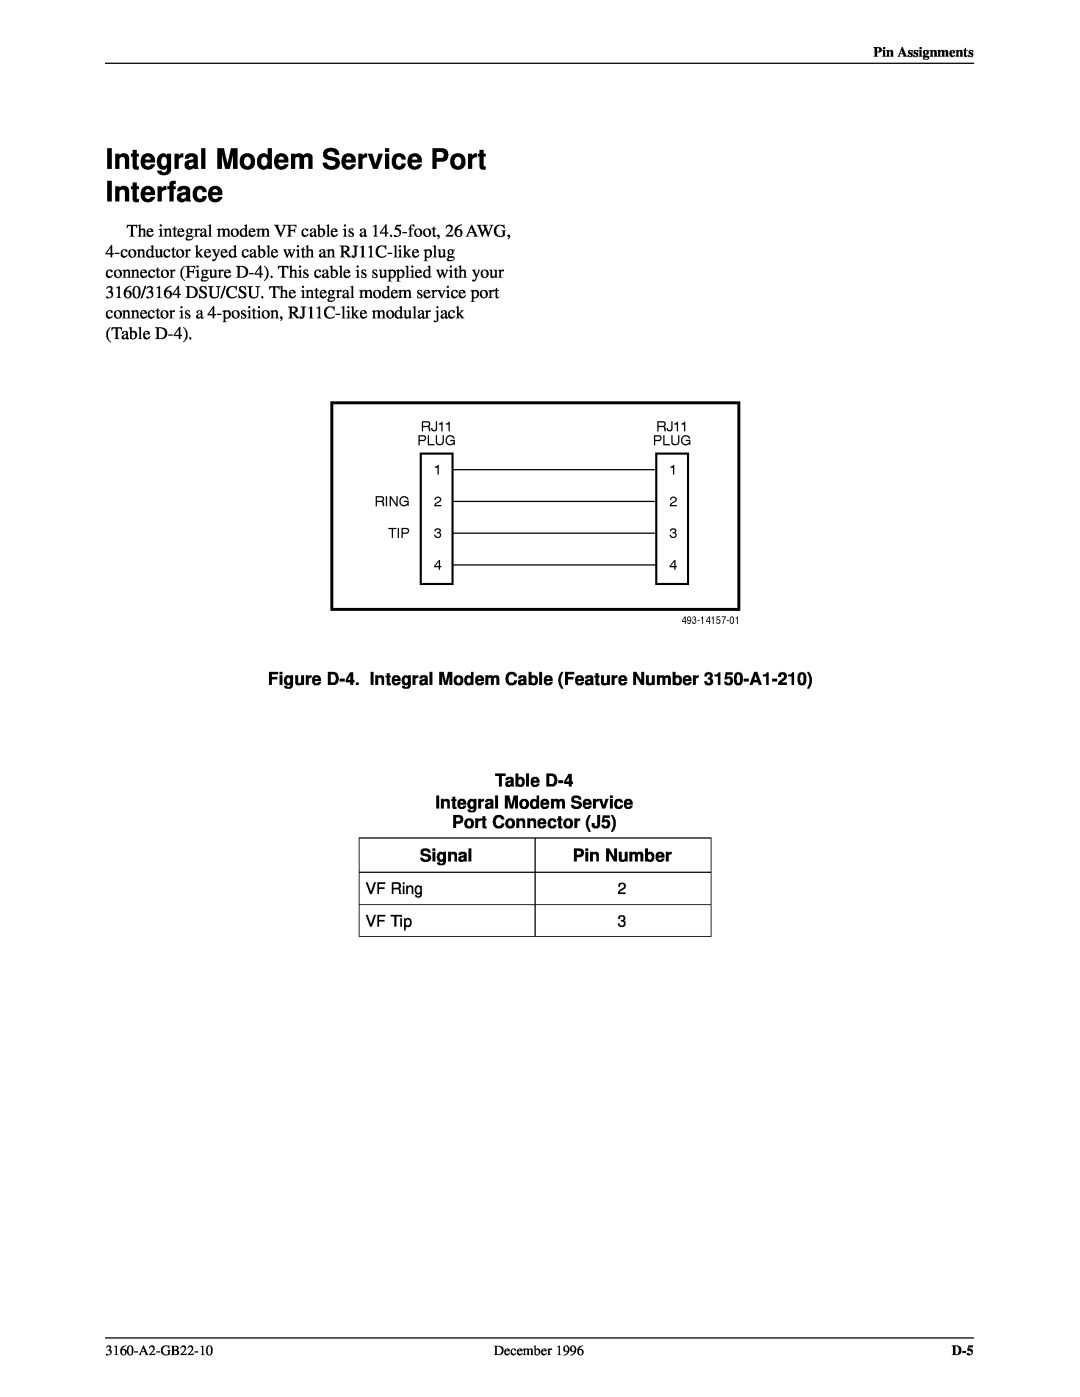 Paradyne 316x Integral Modem Service Port Interface, Figure D-4. Integral Modem Cable Feature Number 3150-A1-210 Table D-4 